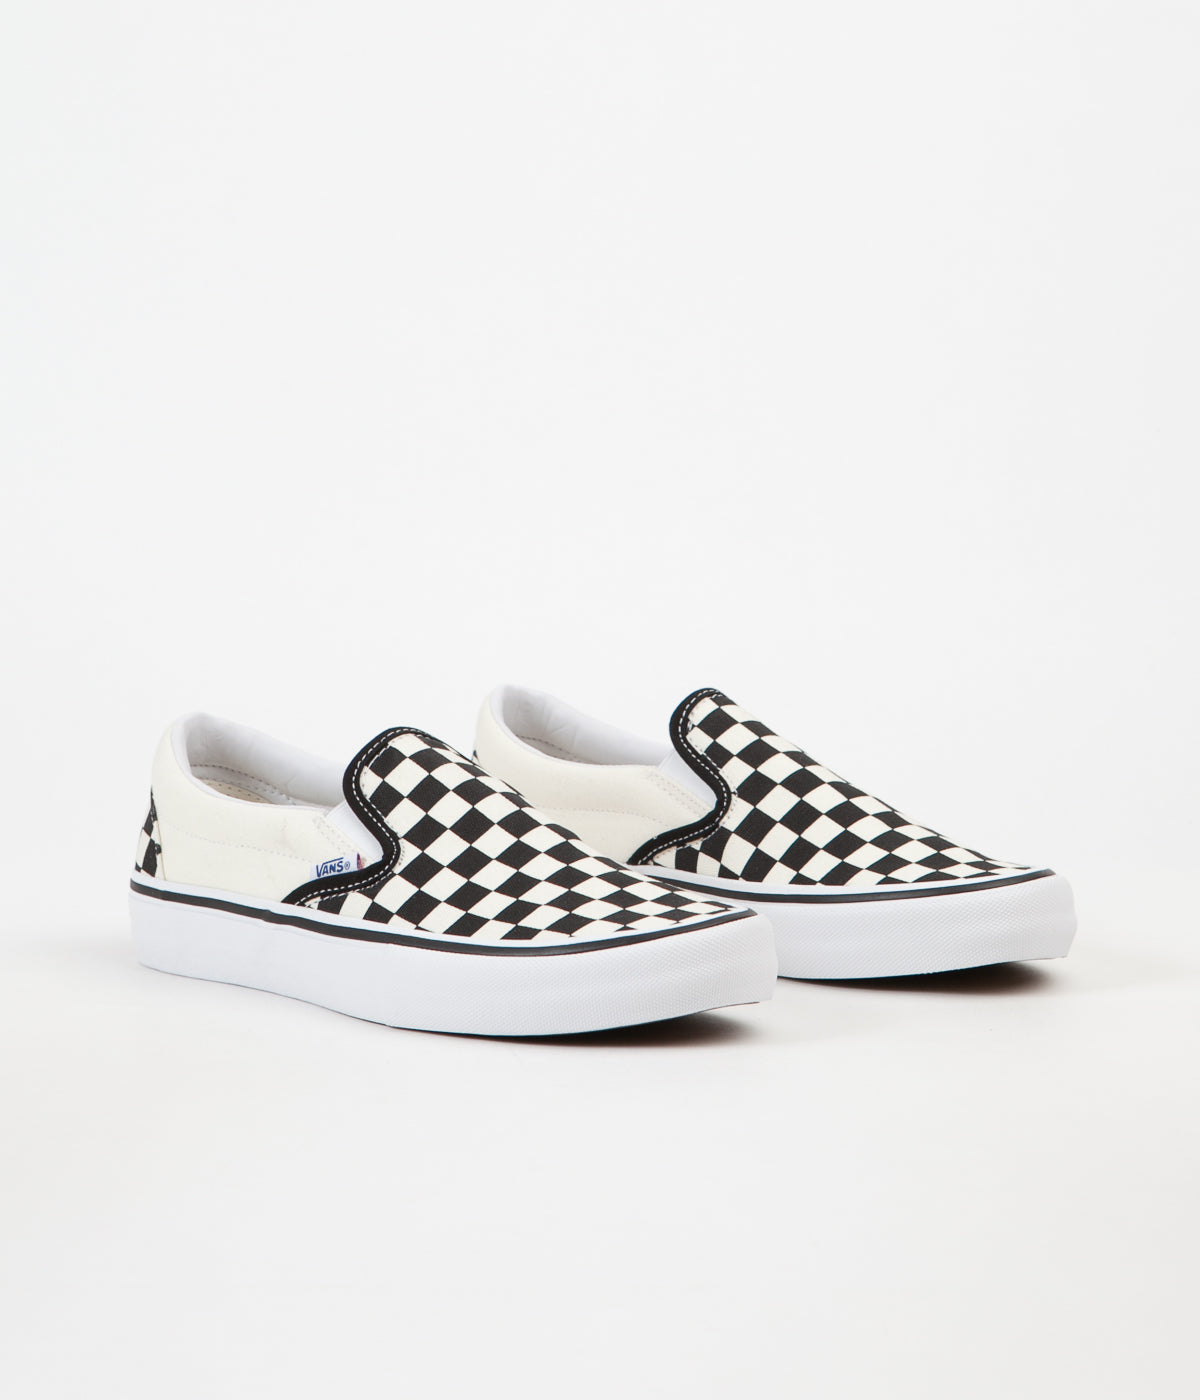 Vans Slip On Pro Checkerboard Shoes - Black / White | Flatspot